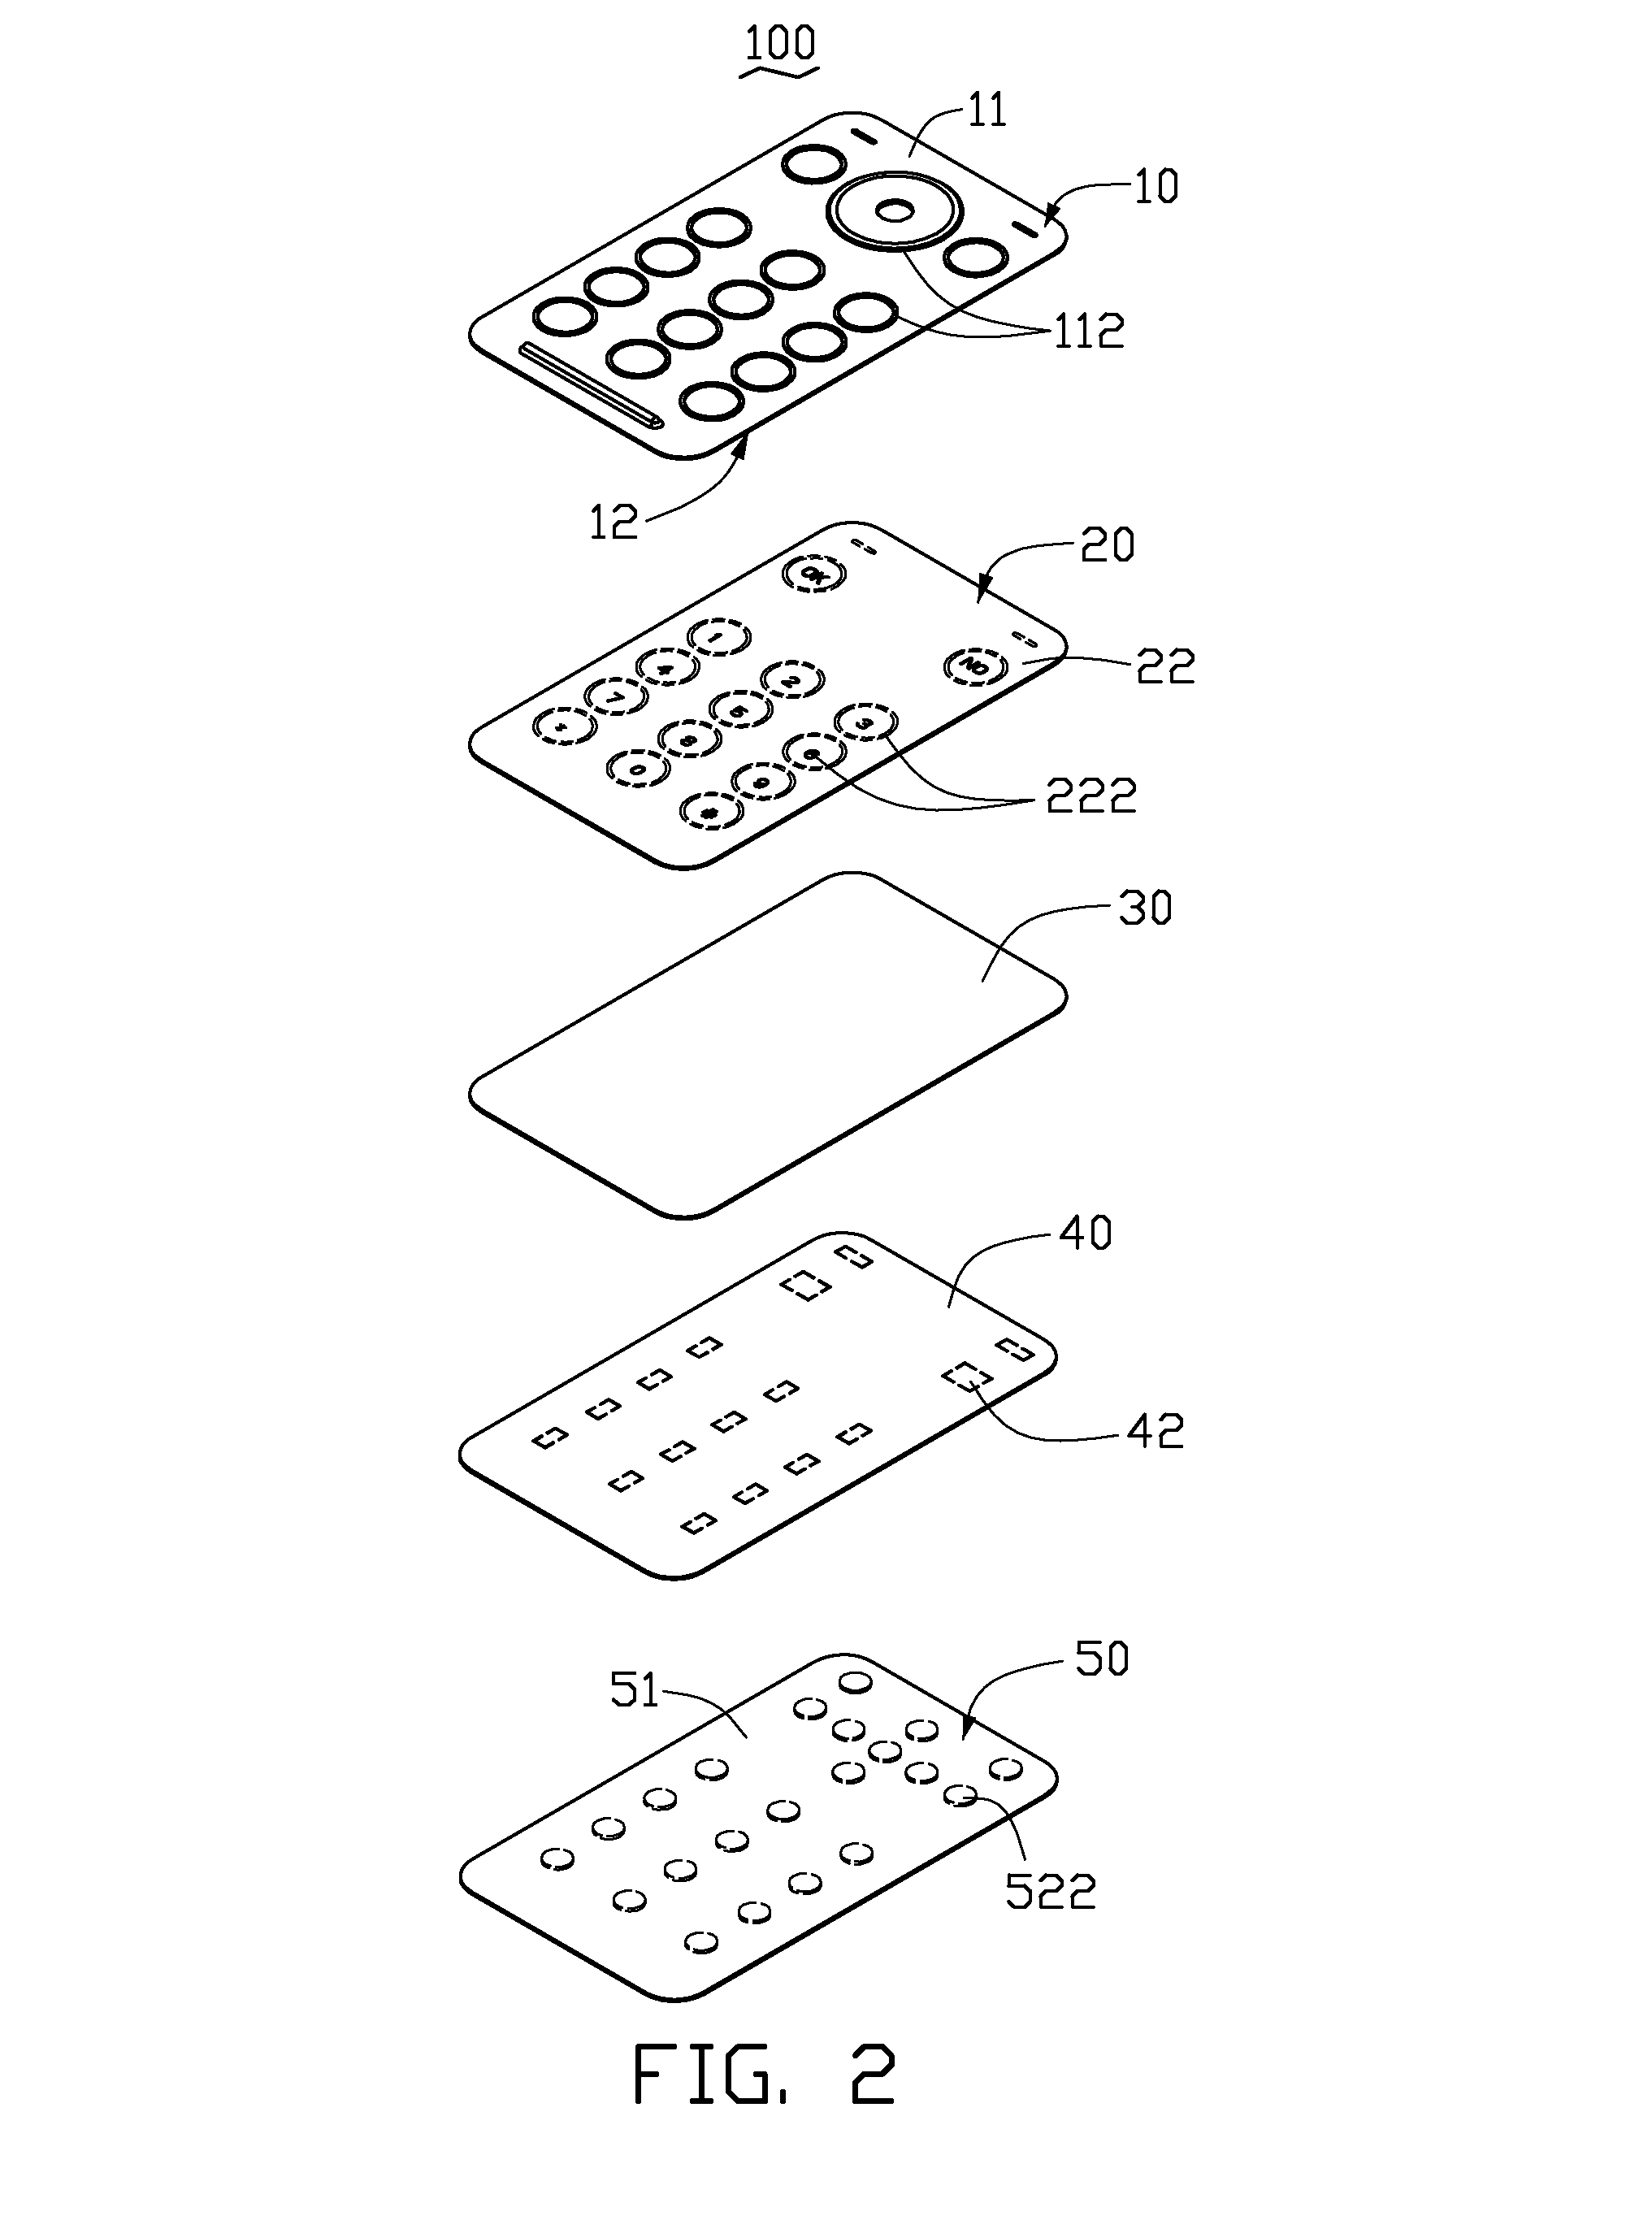 Keypad assembly for electronic device